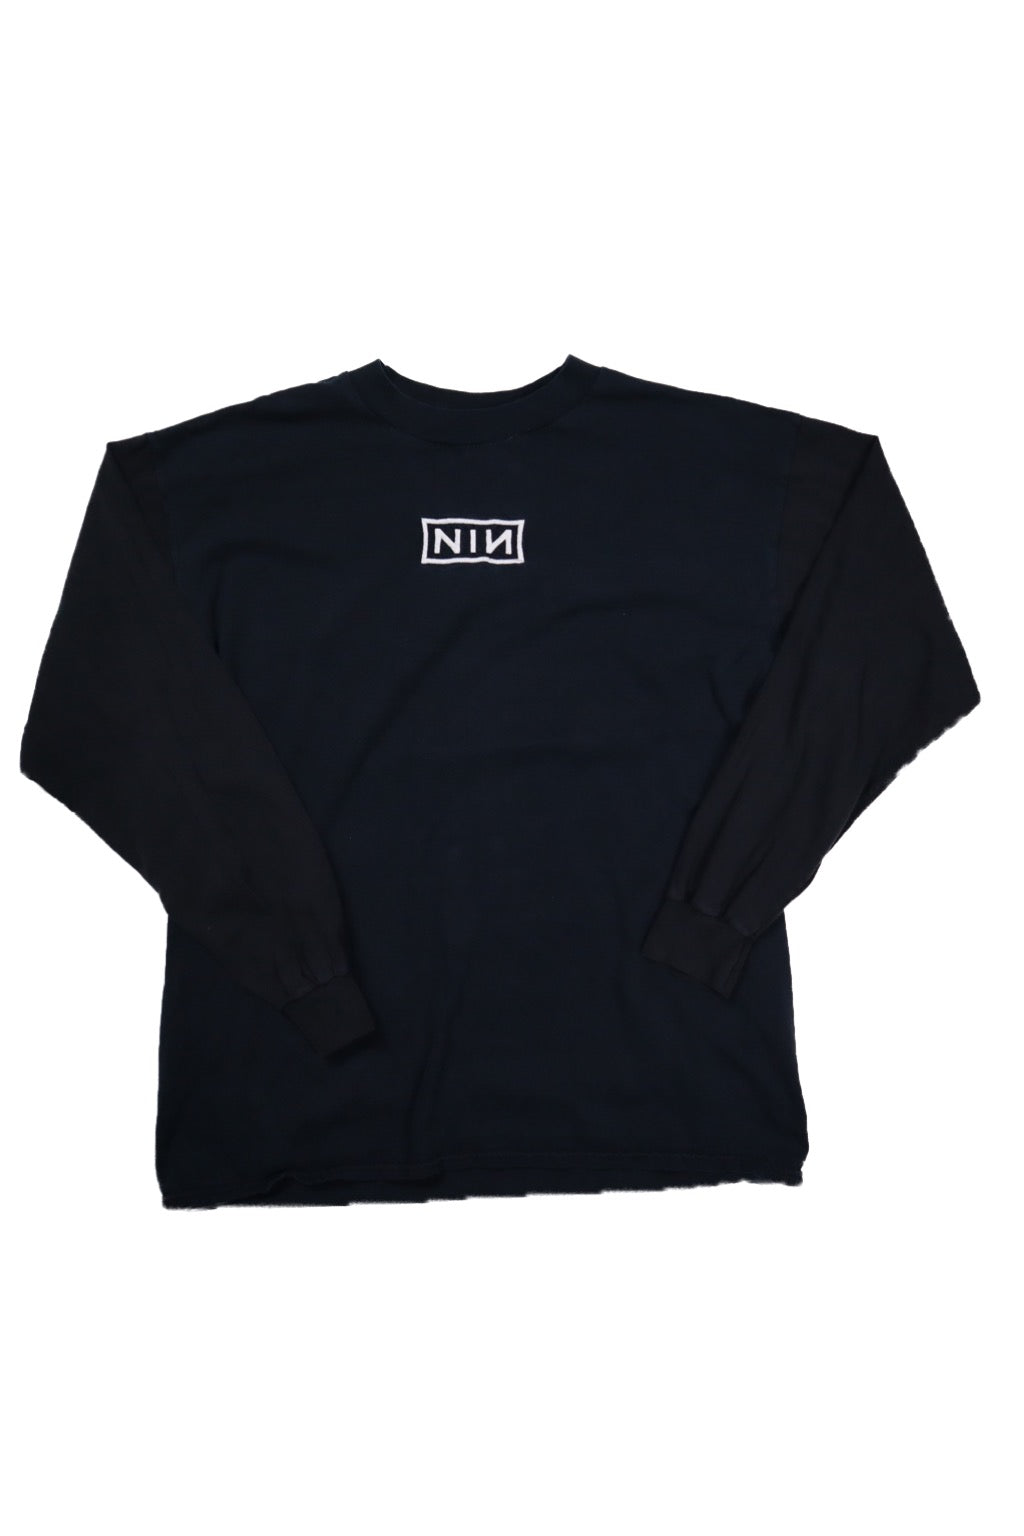 Nine Inch Nails 90s Longsleeve T-Shirt Grail (XL)